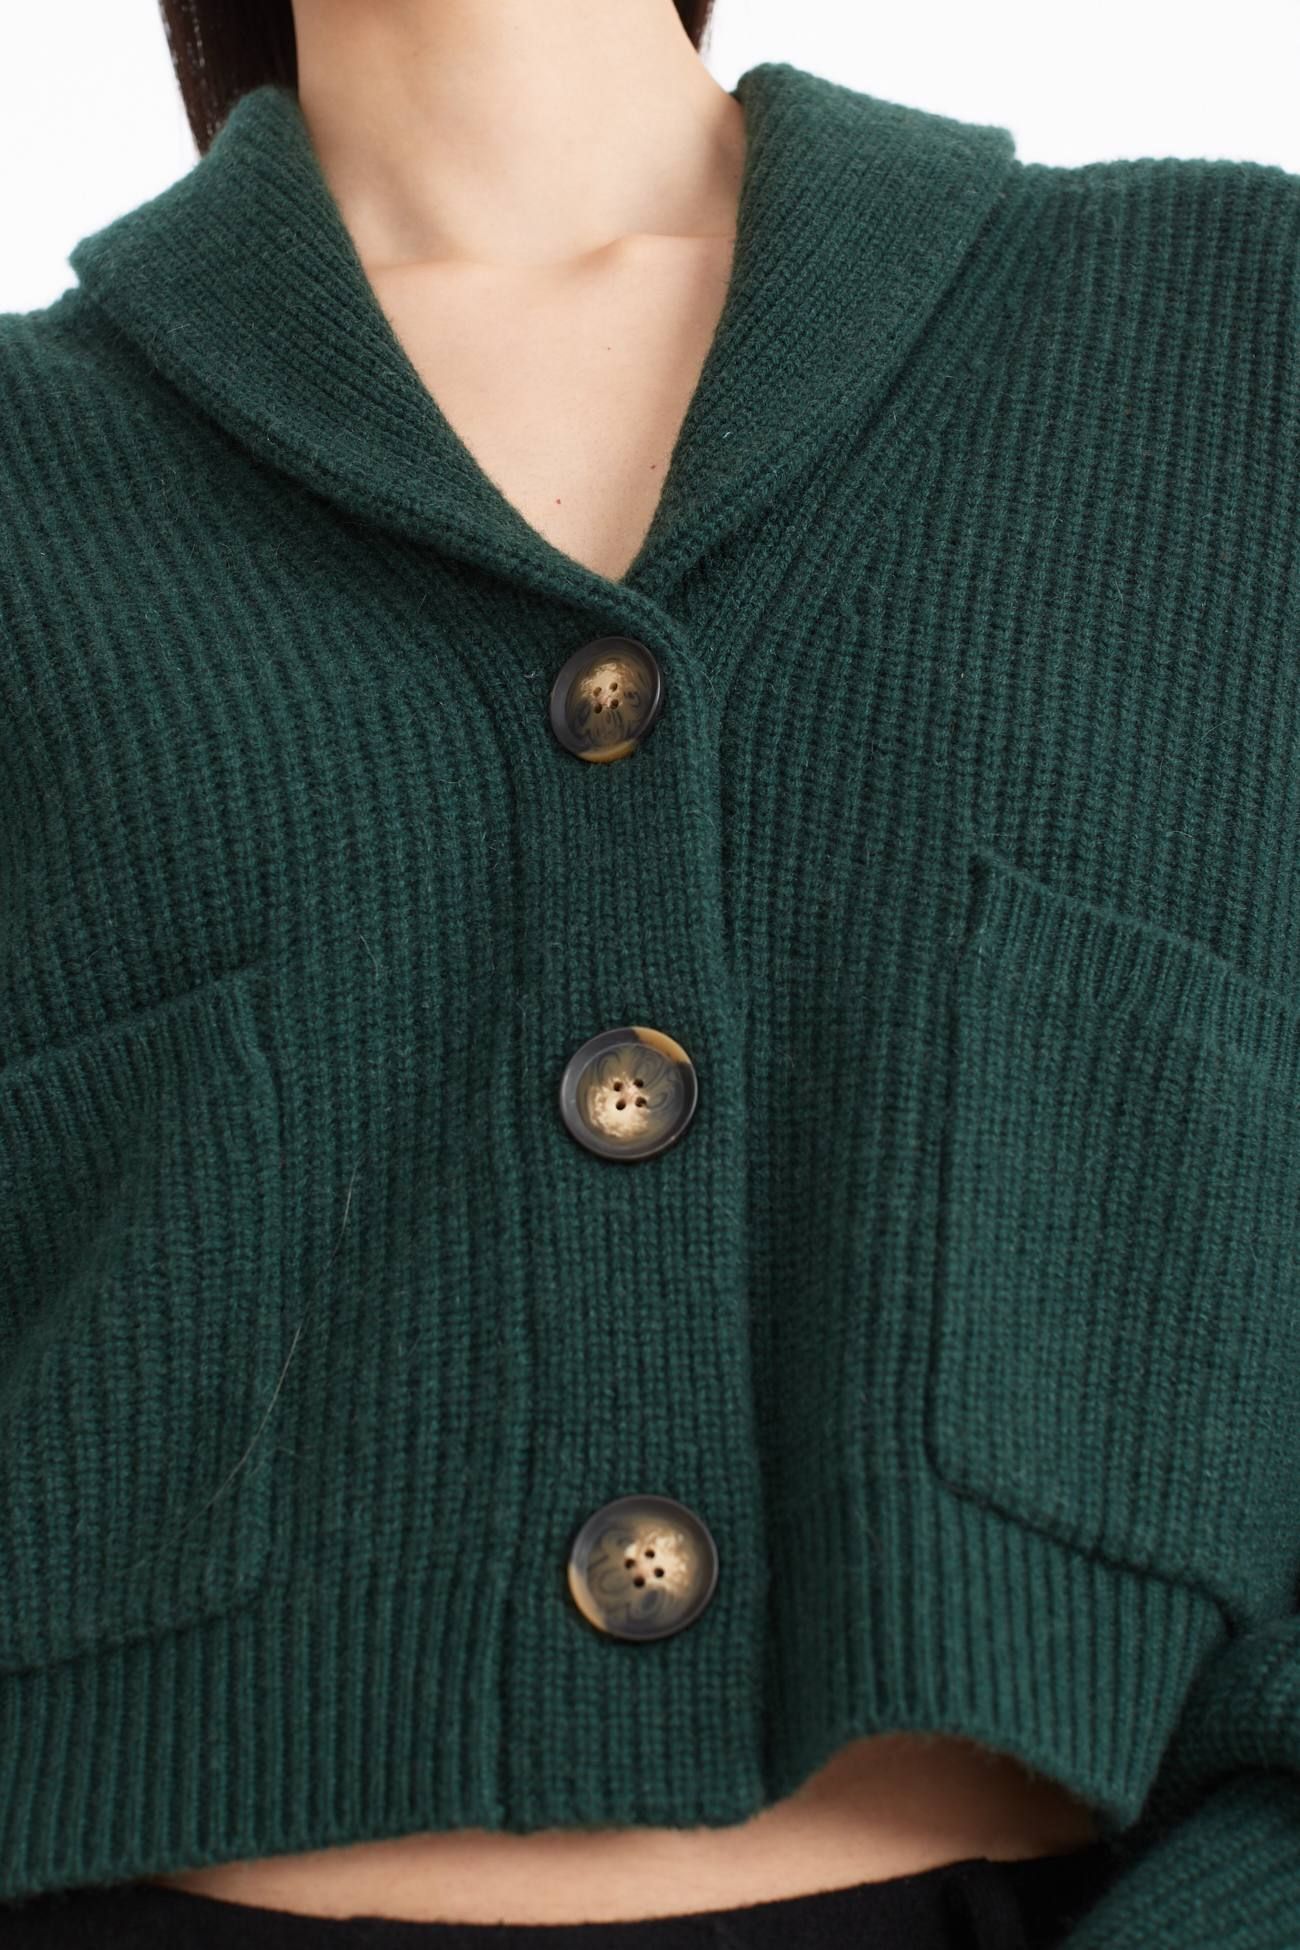 Shawl Collar Cardigan Essential Piece Of
Clothing  In Your Wardrobe